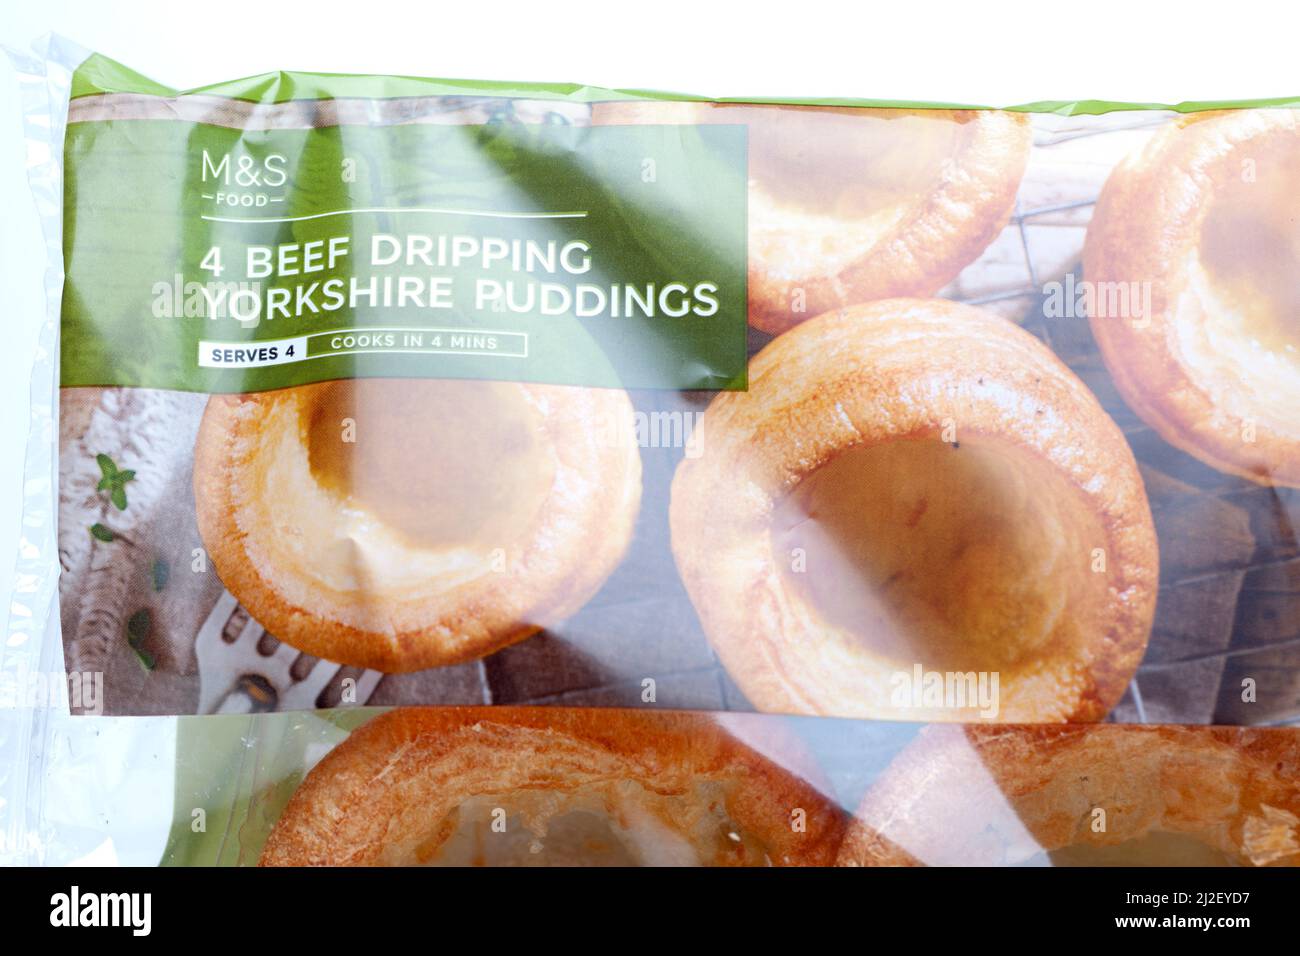 Mands 4 Puddings de Yorkshire para Perfusión de Carne Foto de stock